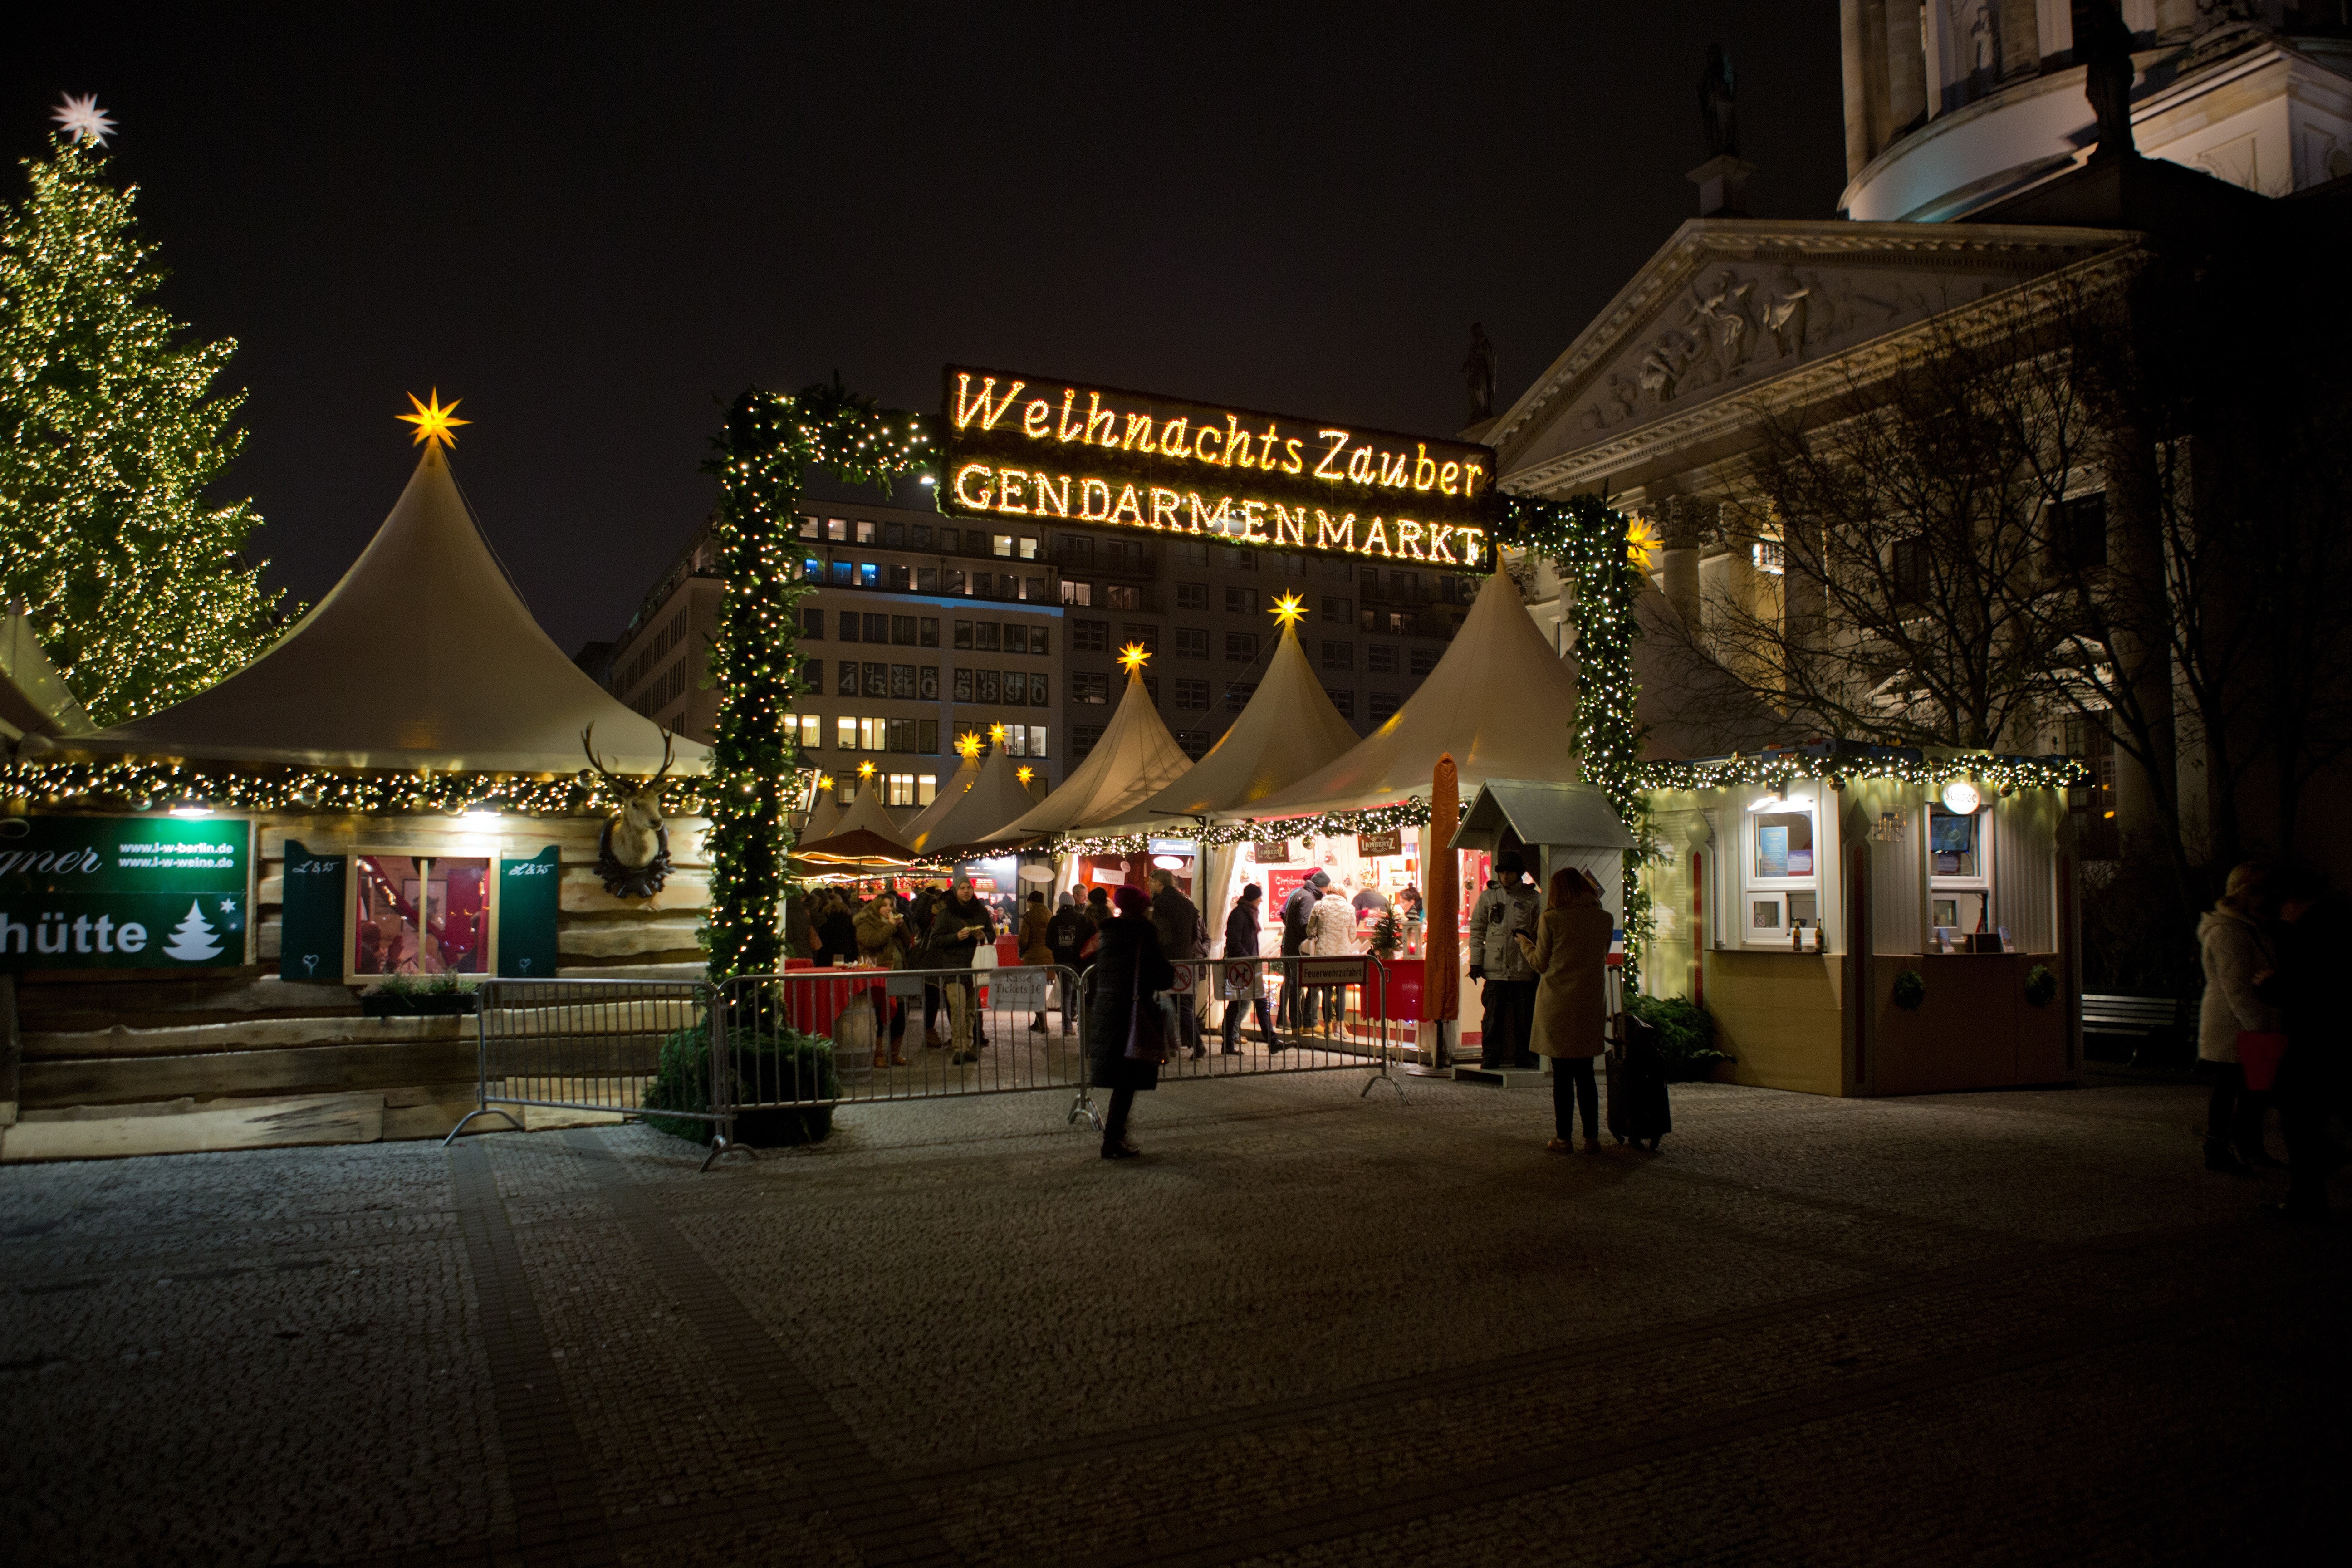 Gendarmenmarkt, Weihnachts Zauber, night, illuminated